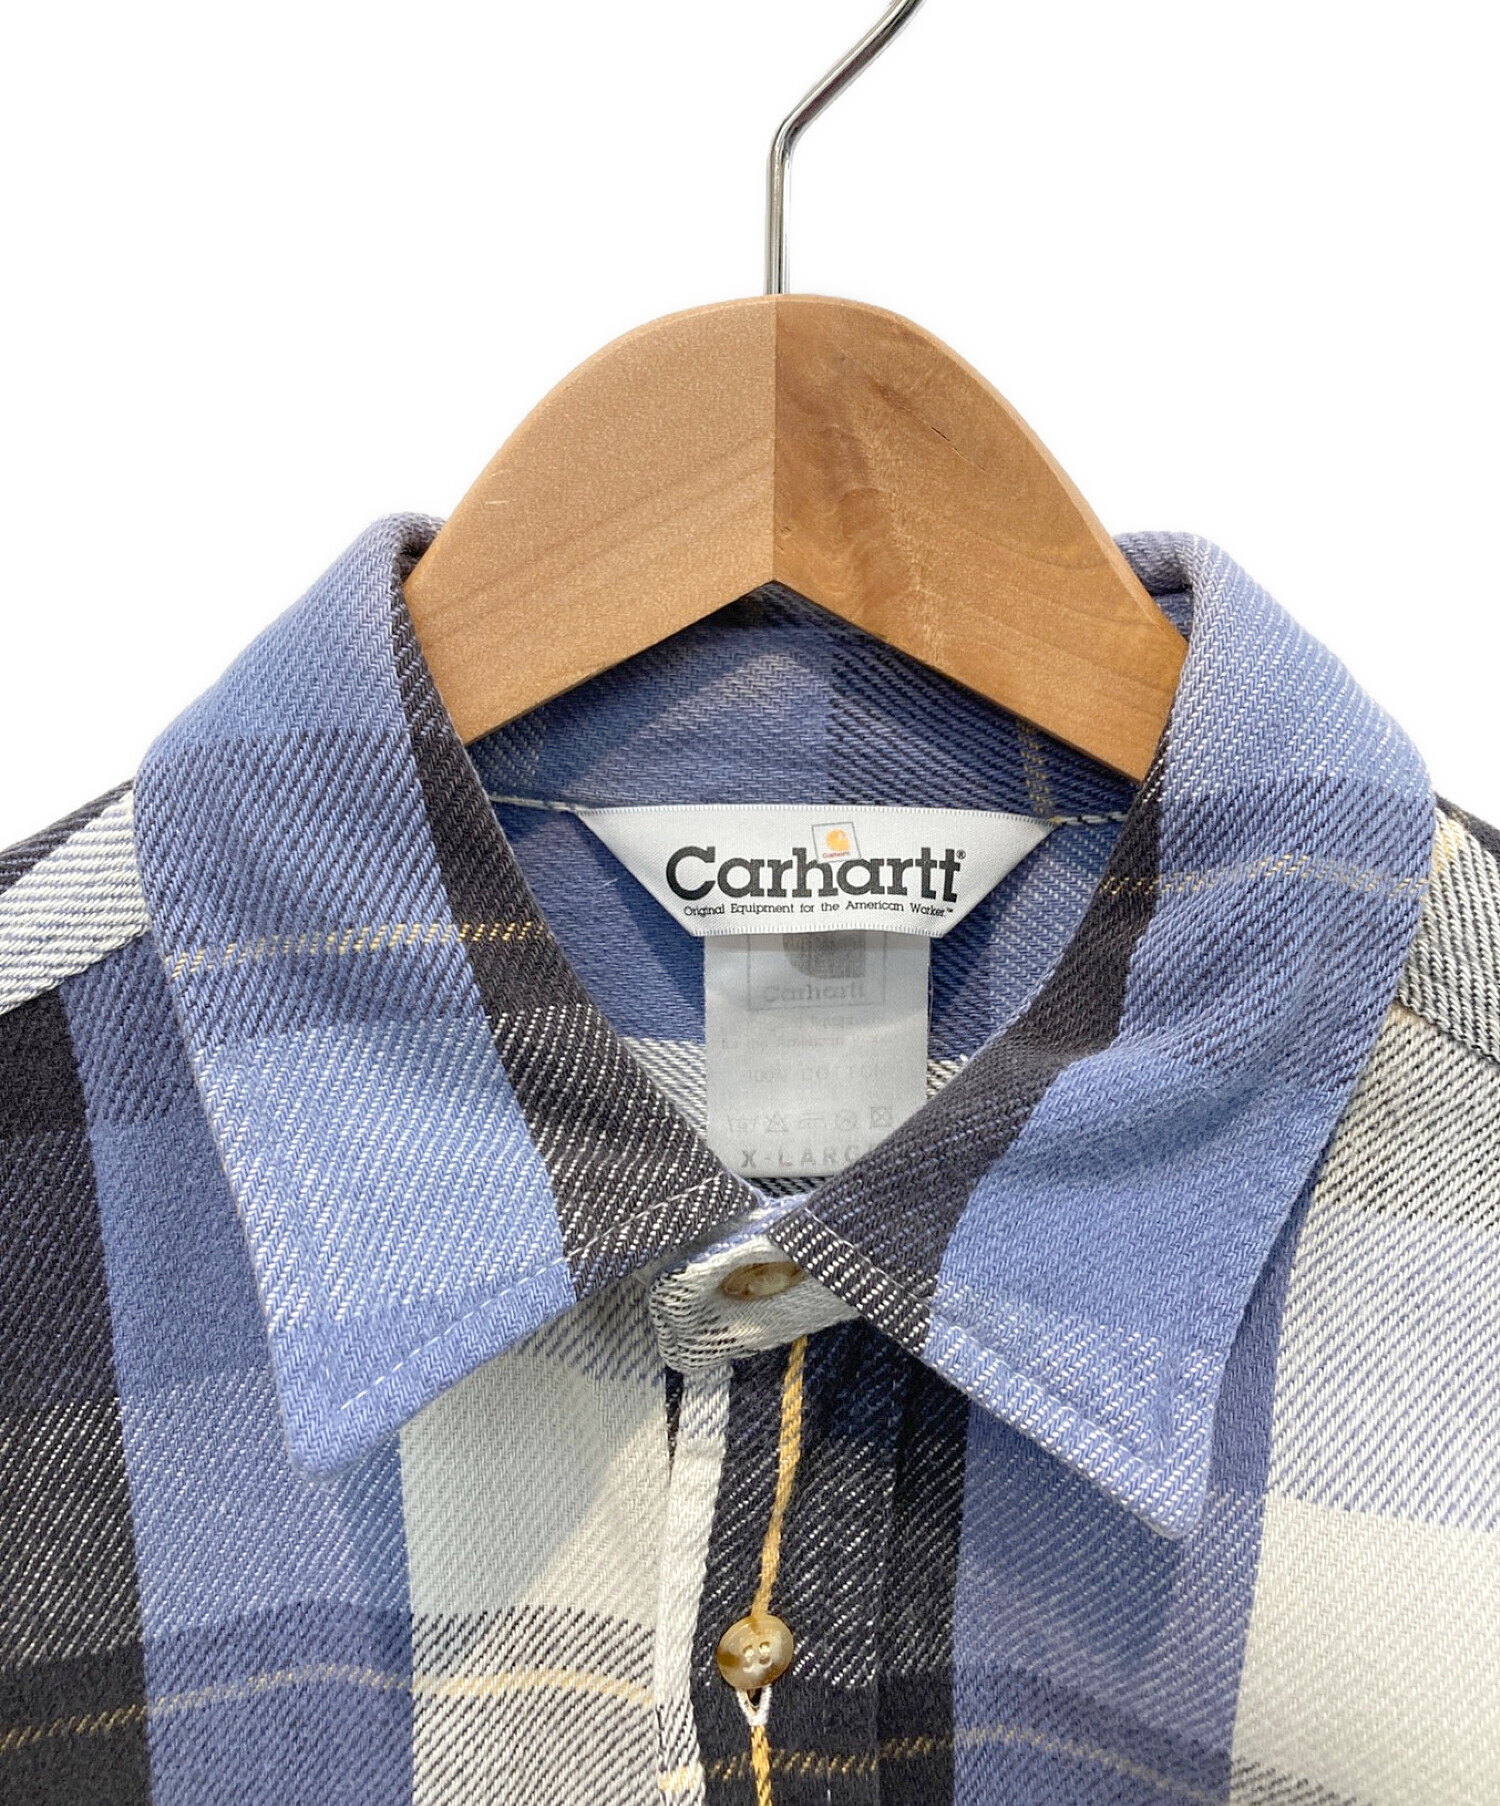 CarHartt (カーハート) チェックネルシャツ ブルー×ネイビー サイズ:XL